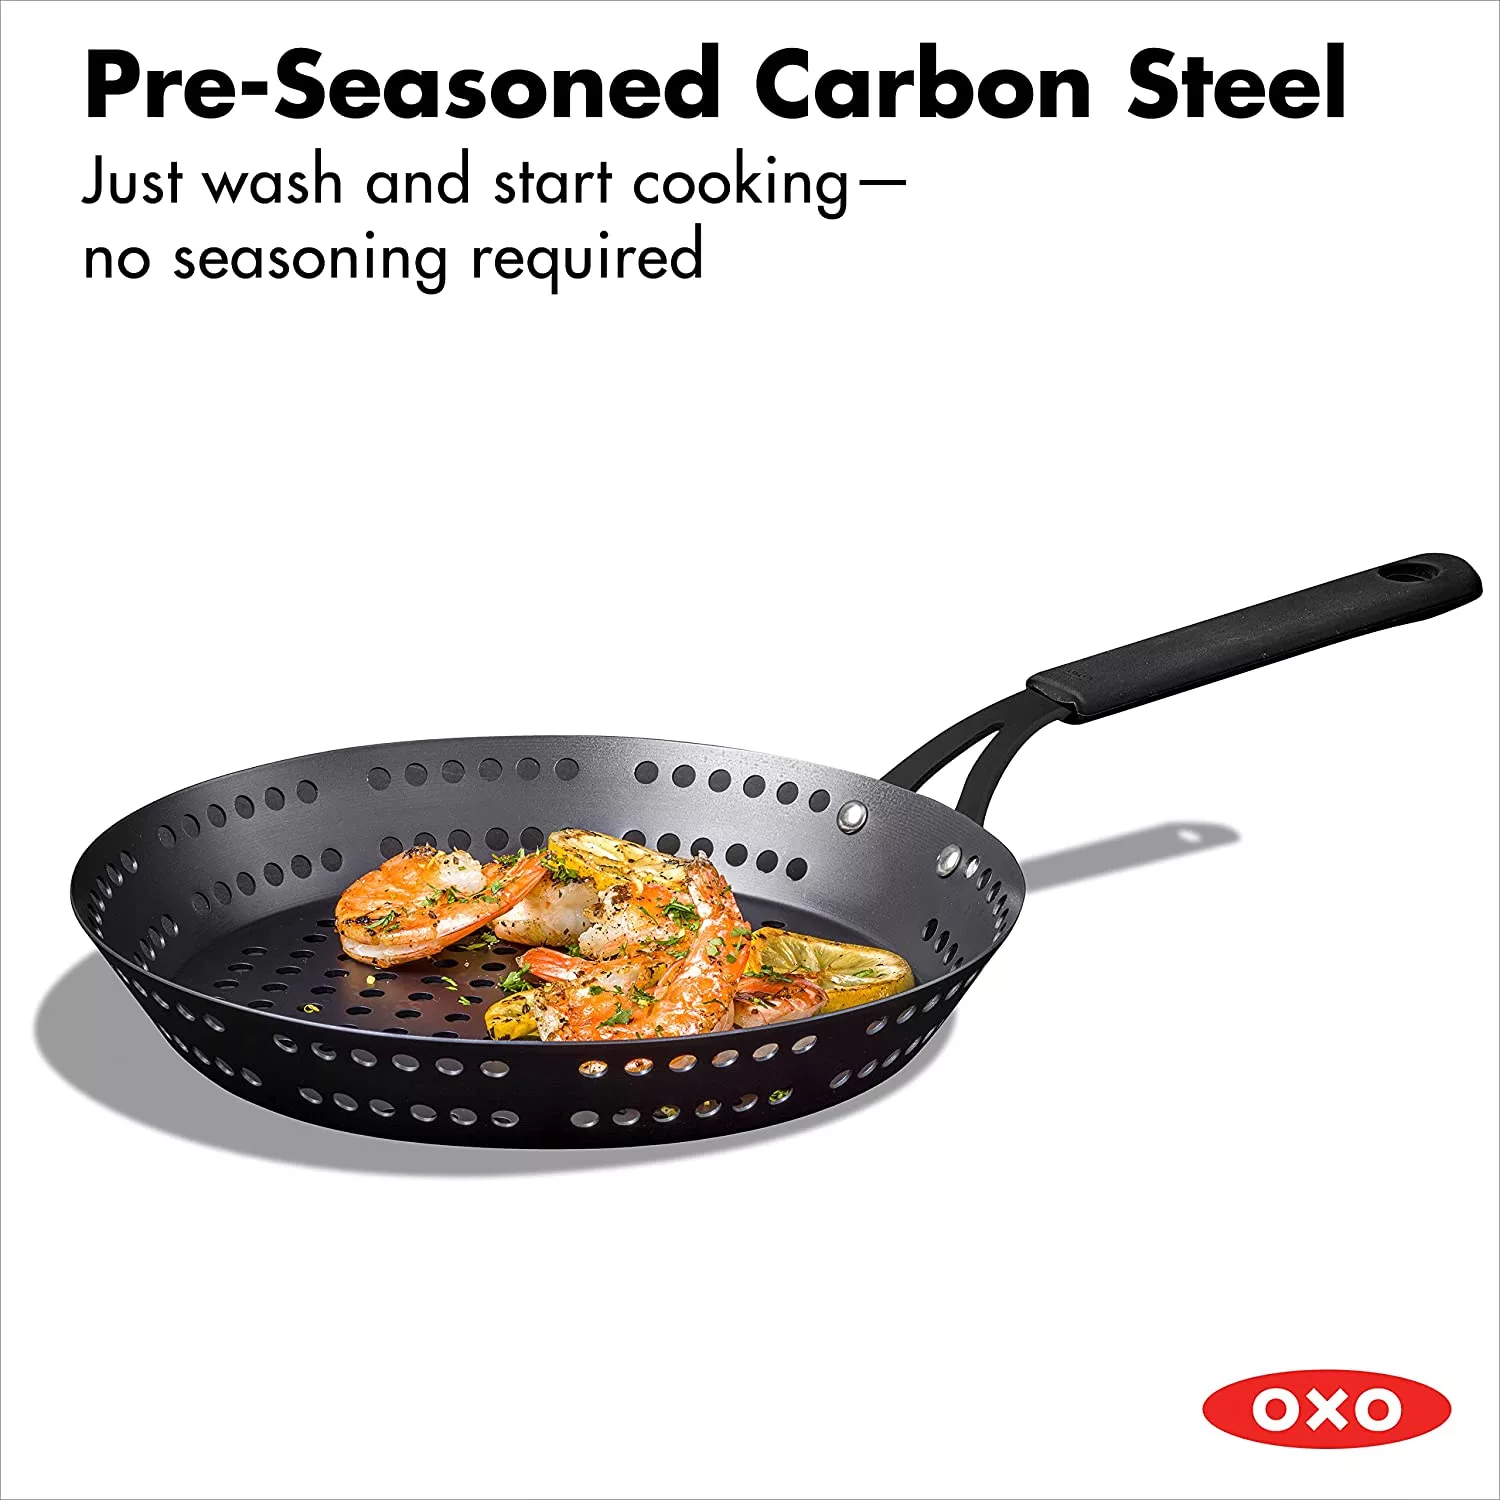 OXO 12 Inch Pre-Seasoned Grilling Skillet pre seasoned carbon steel